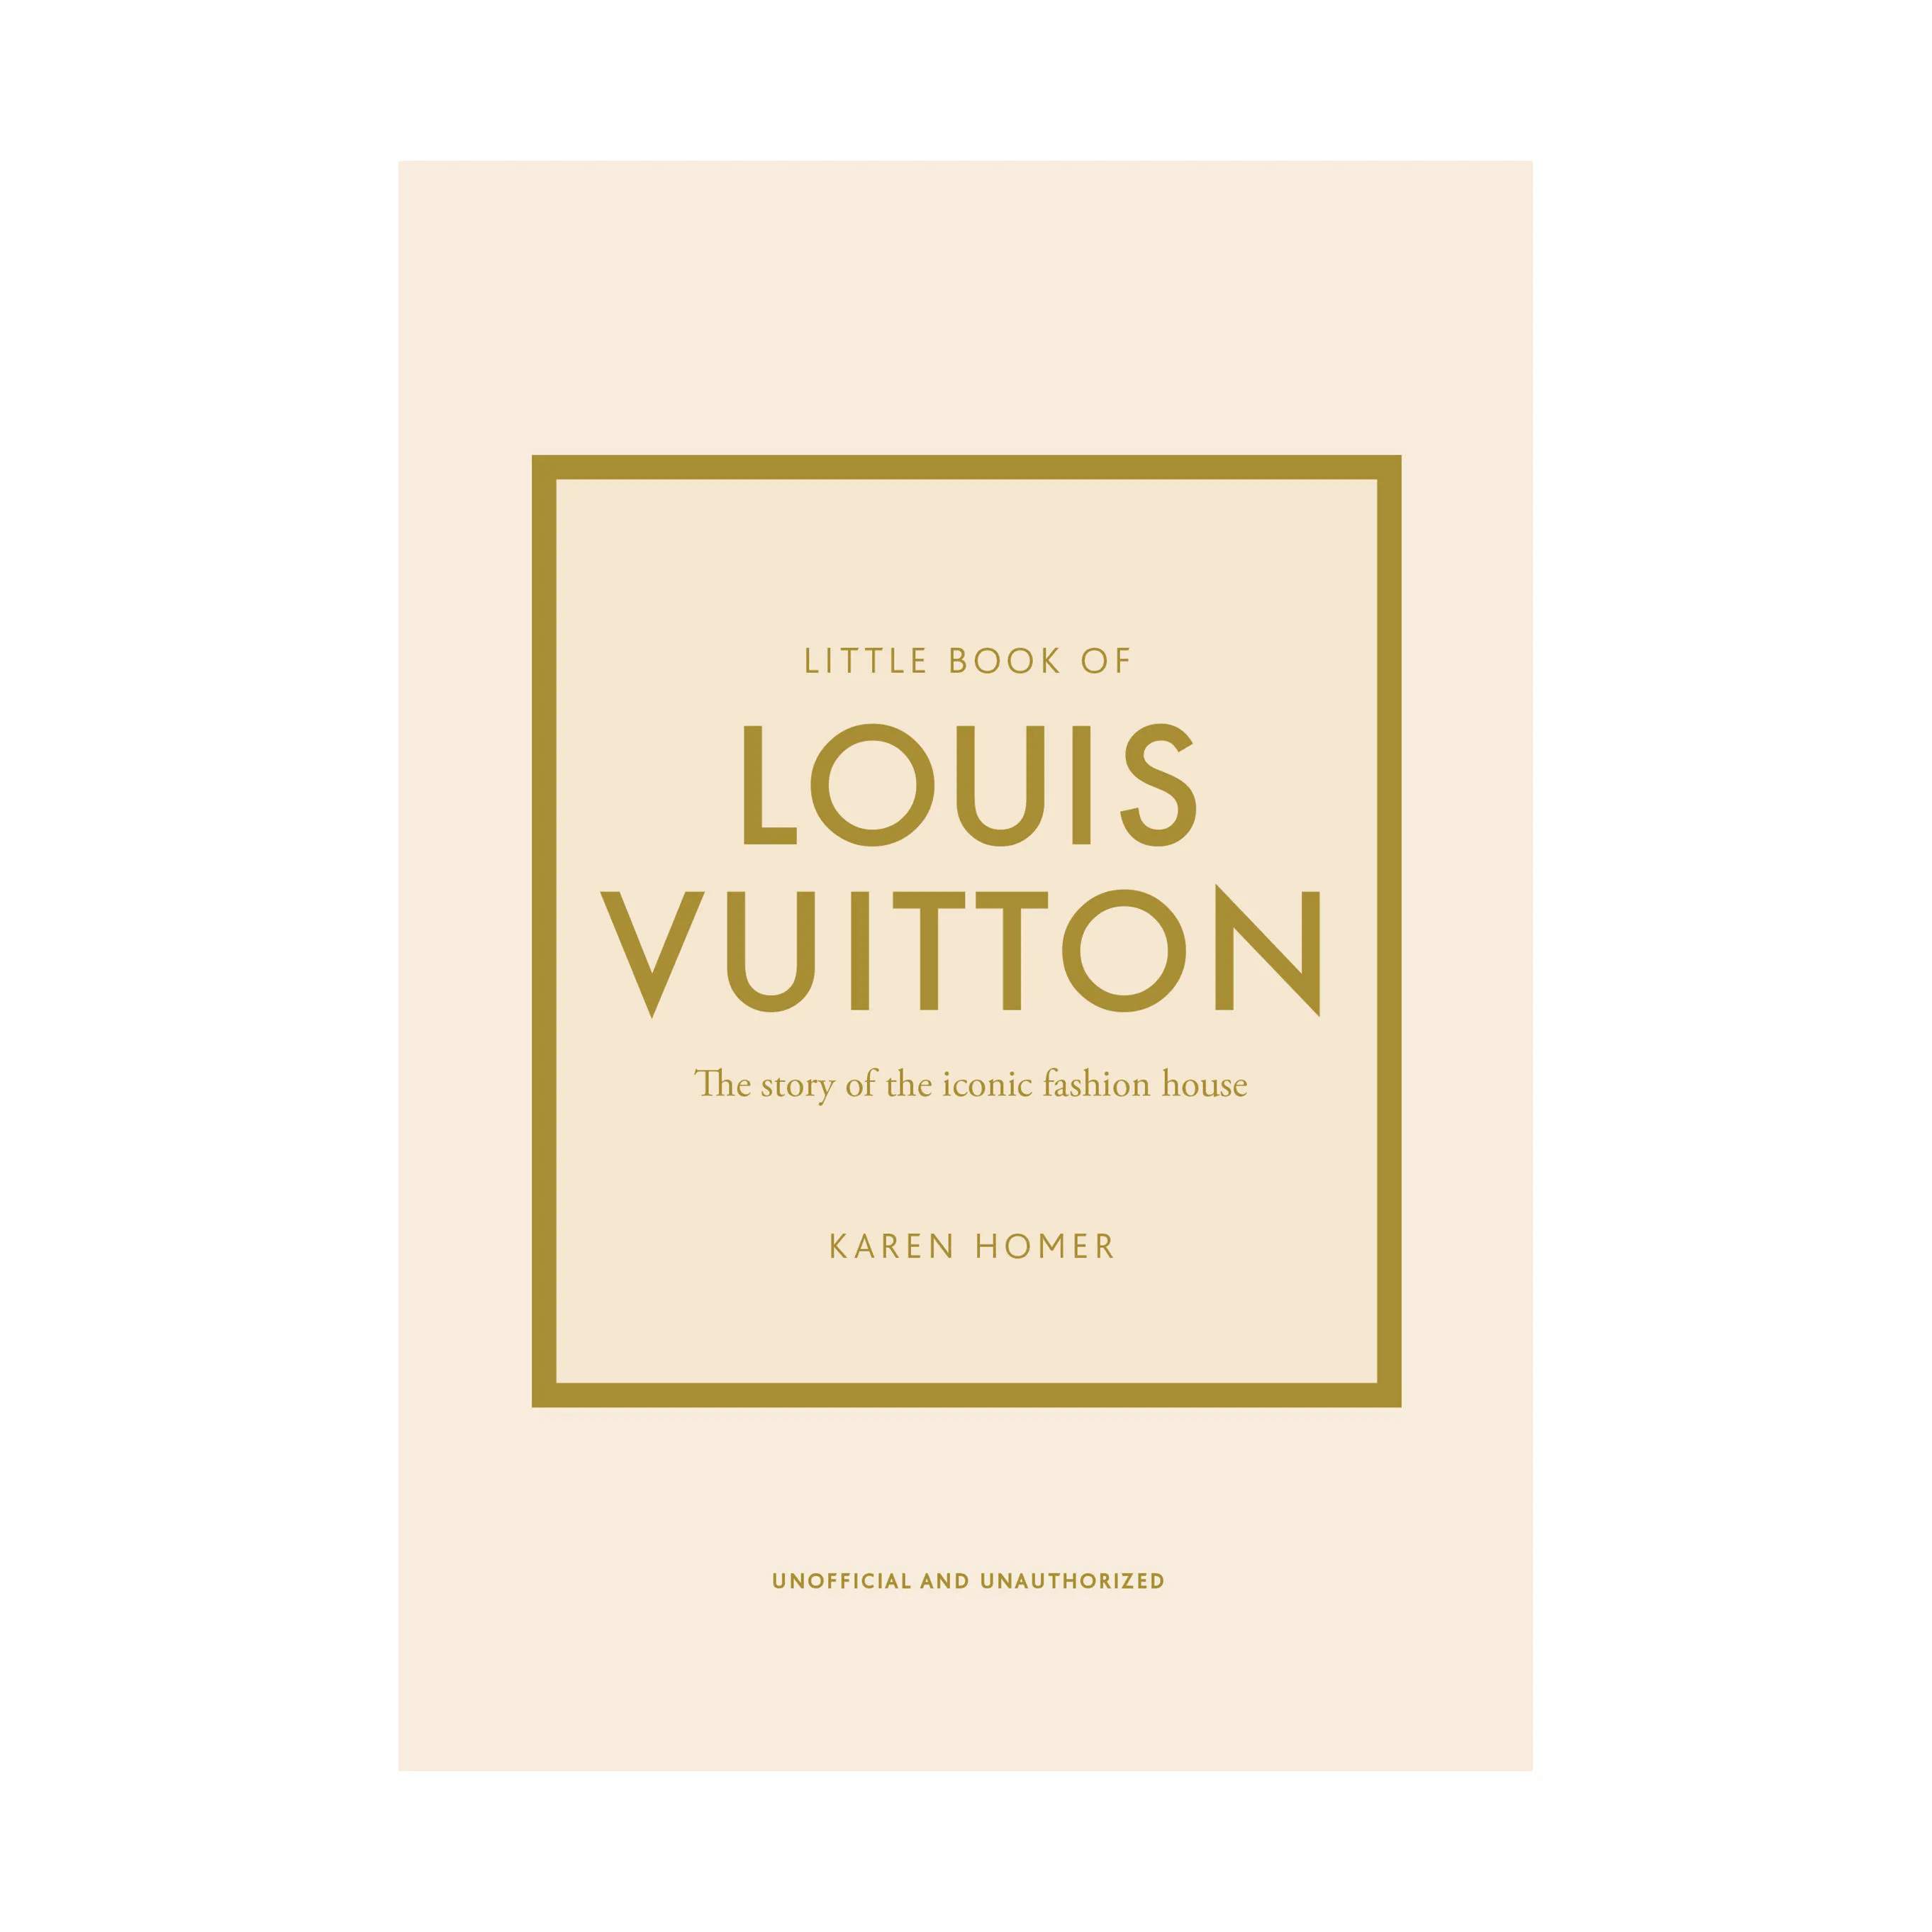 Little Book of Louis Vuitton øvrige bøger